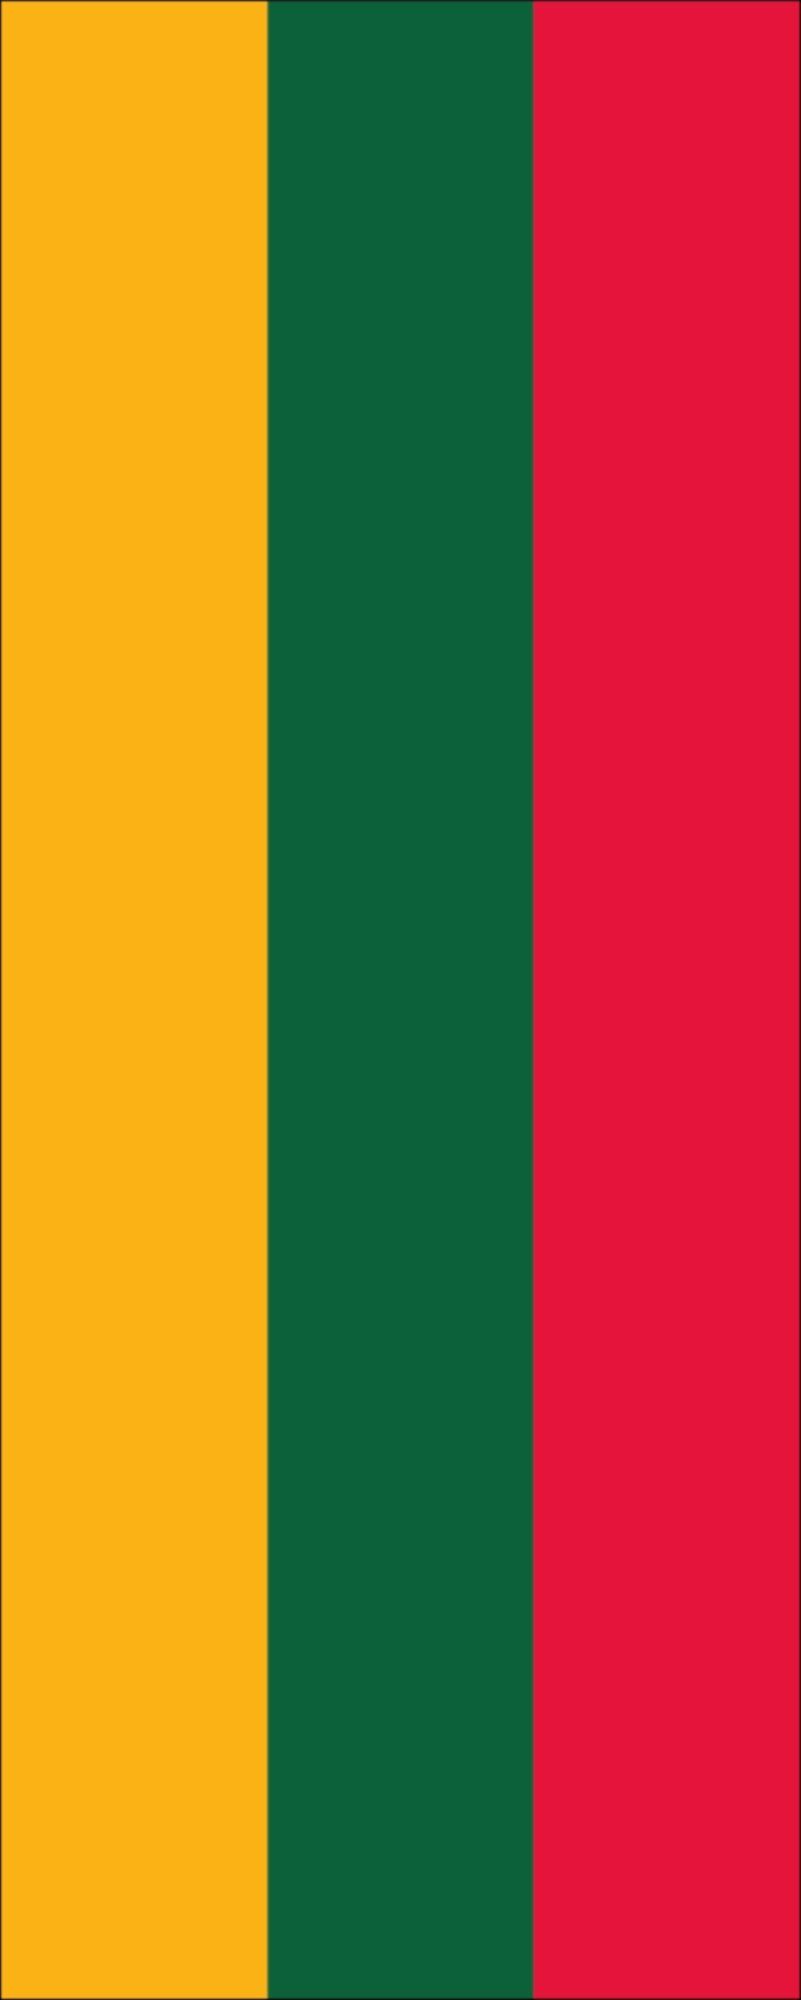 g/m² Hochformat Flagge Litauen flaggenmeer 110 Flagge